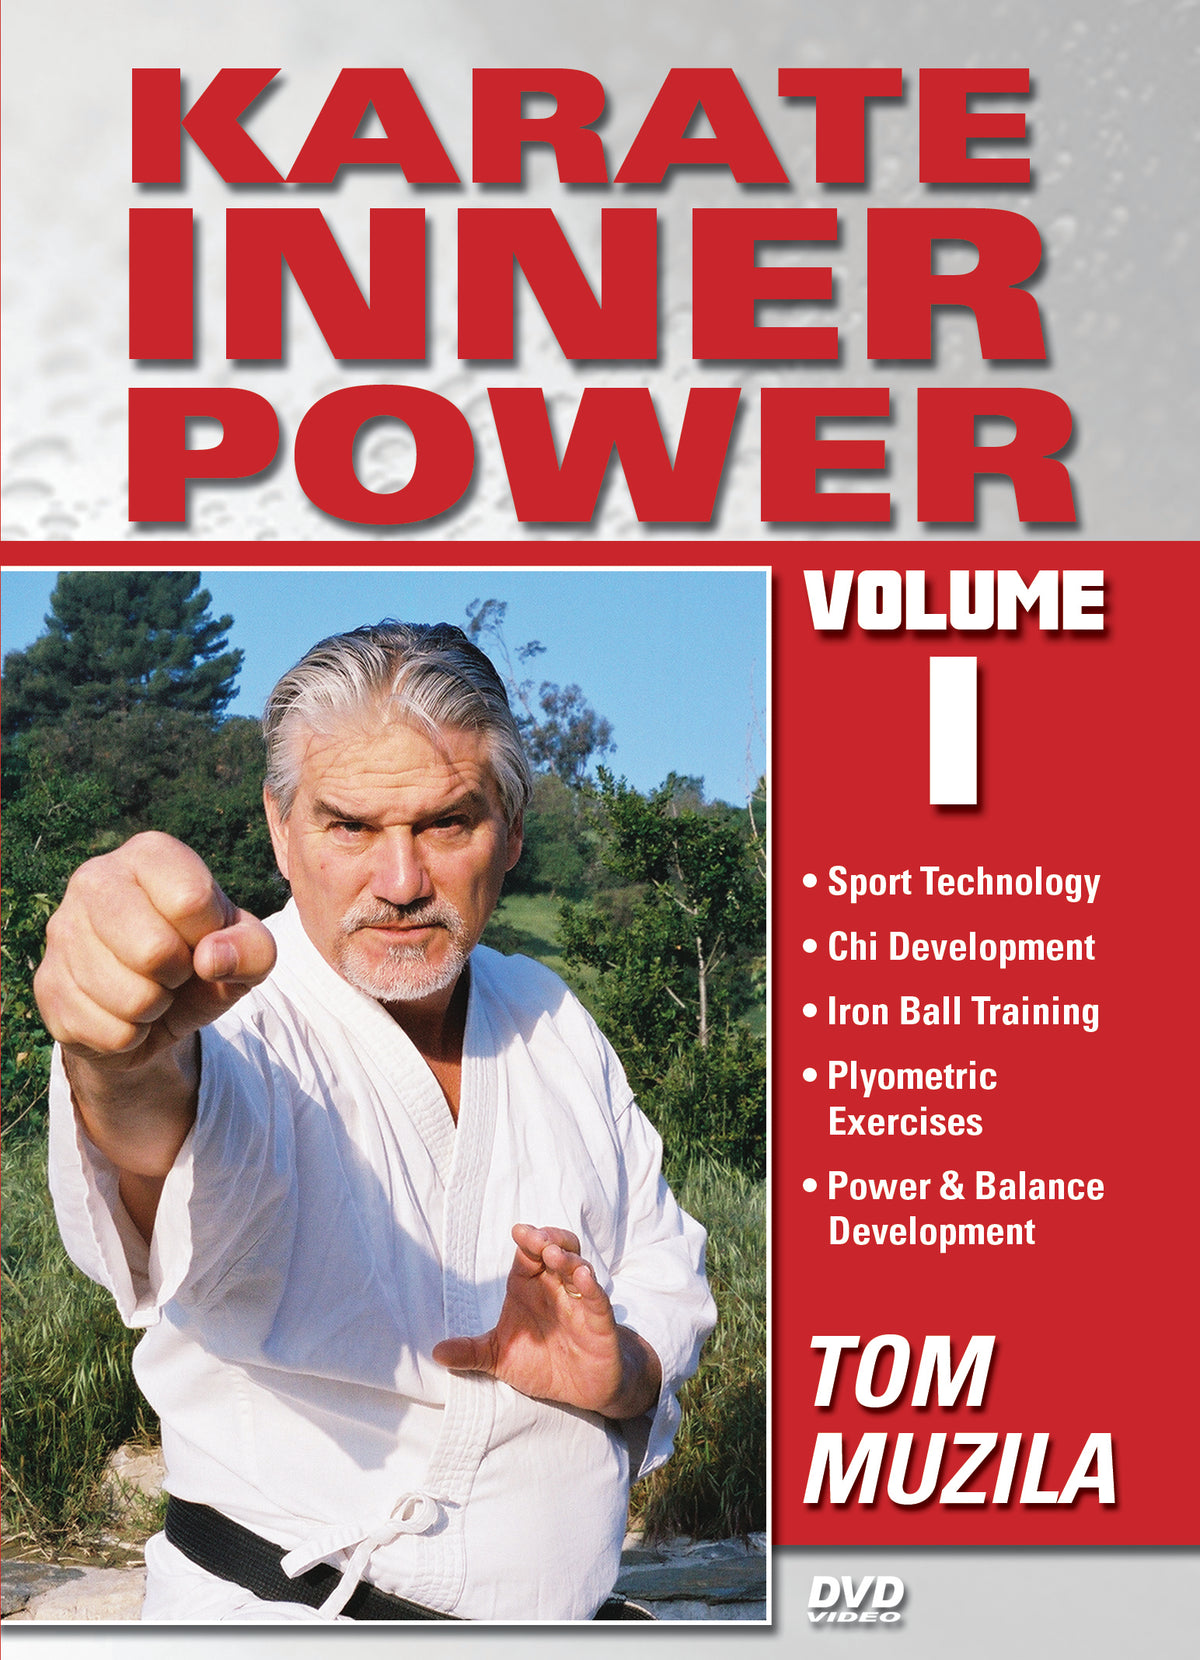 Karate the Inner Power #1 ki chi DVD Tom Muzila plyometric concepts for speed